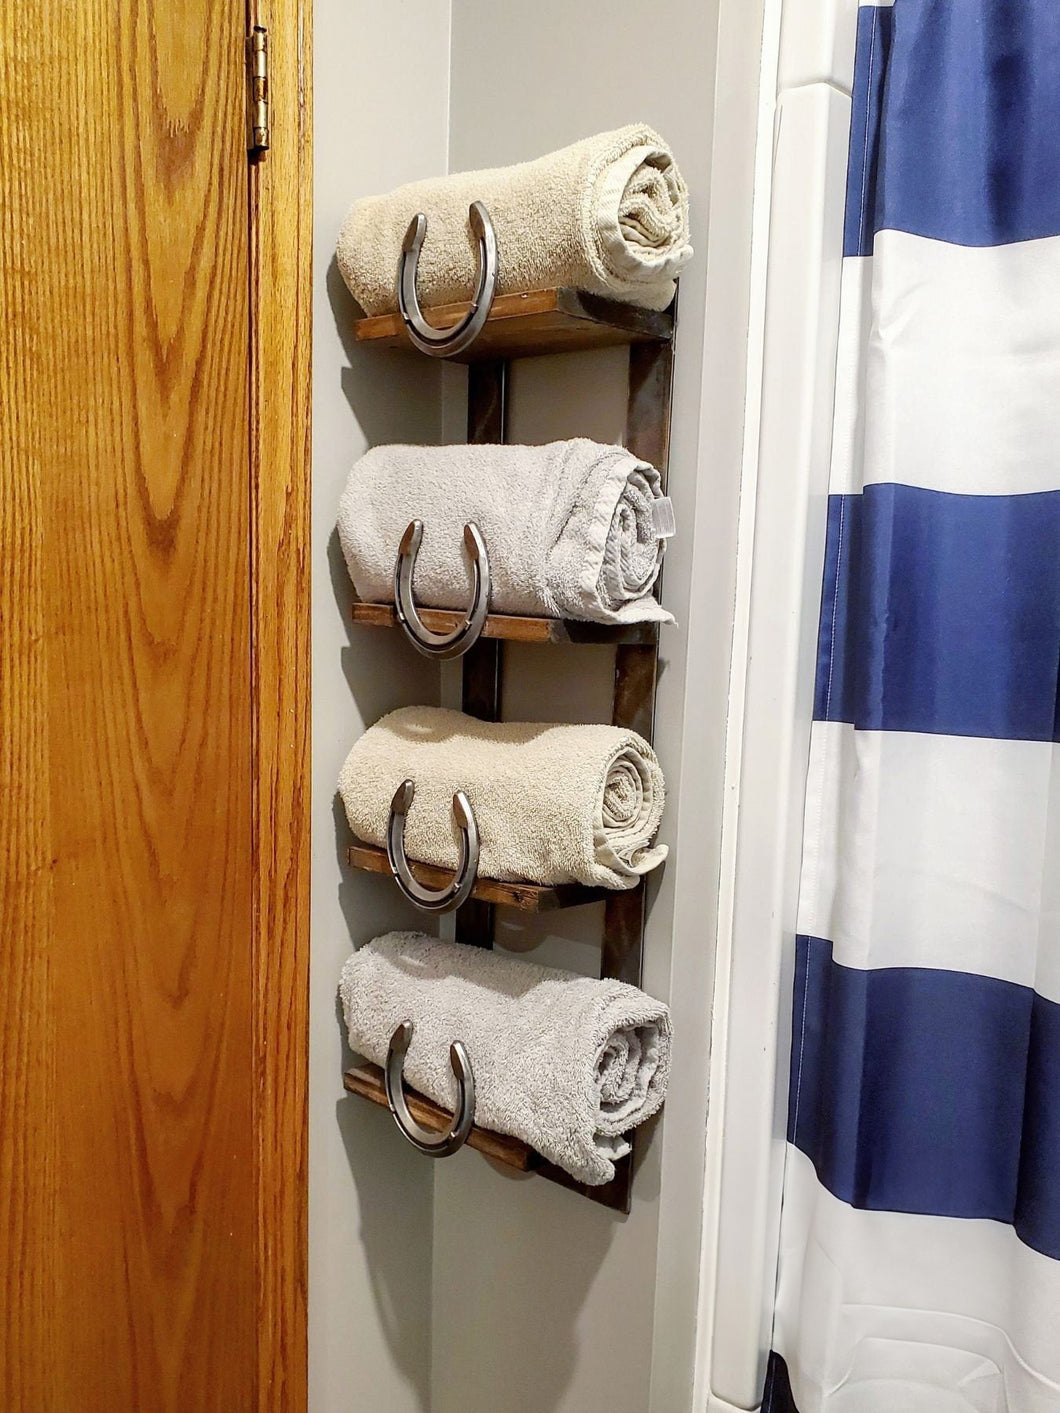 Horseshoe Towel Rack with 5 Shelves